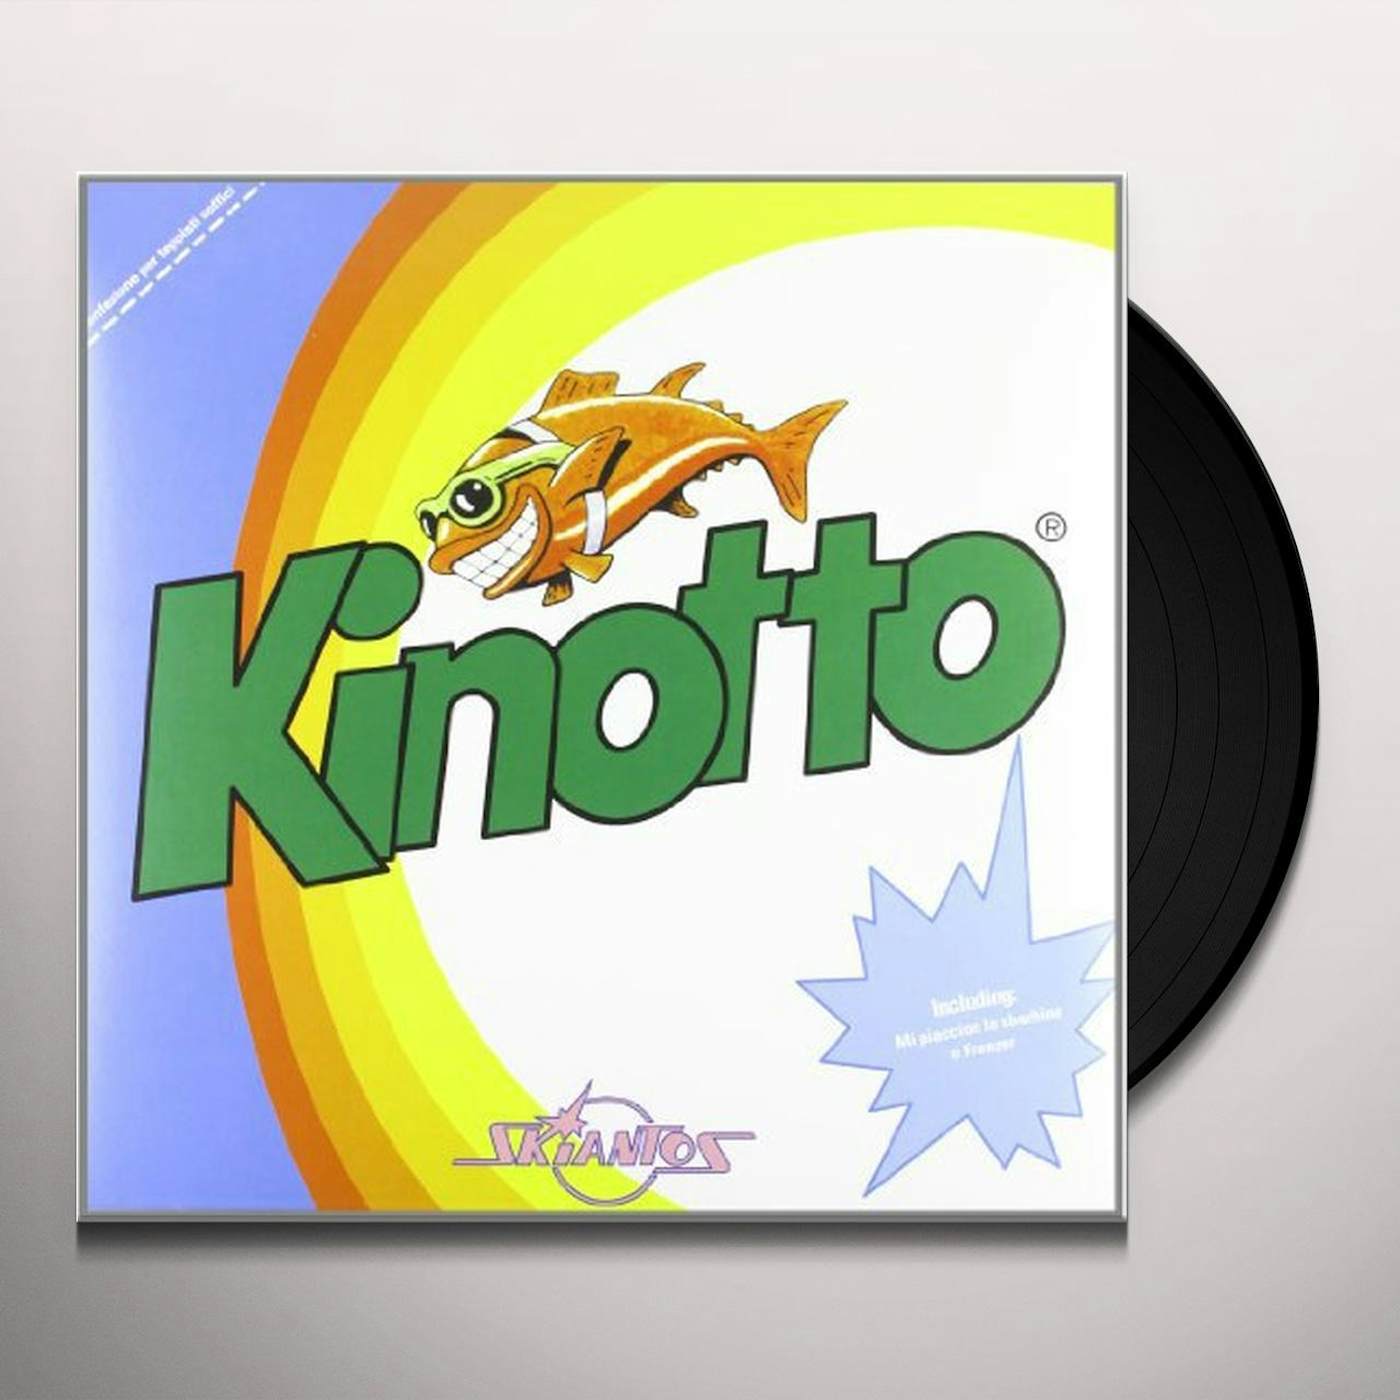 Skiantos Kinotto Vinyl Record